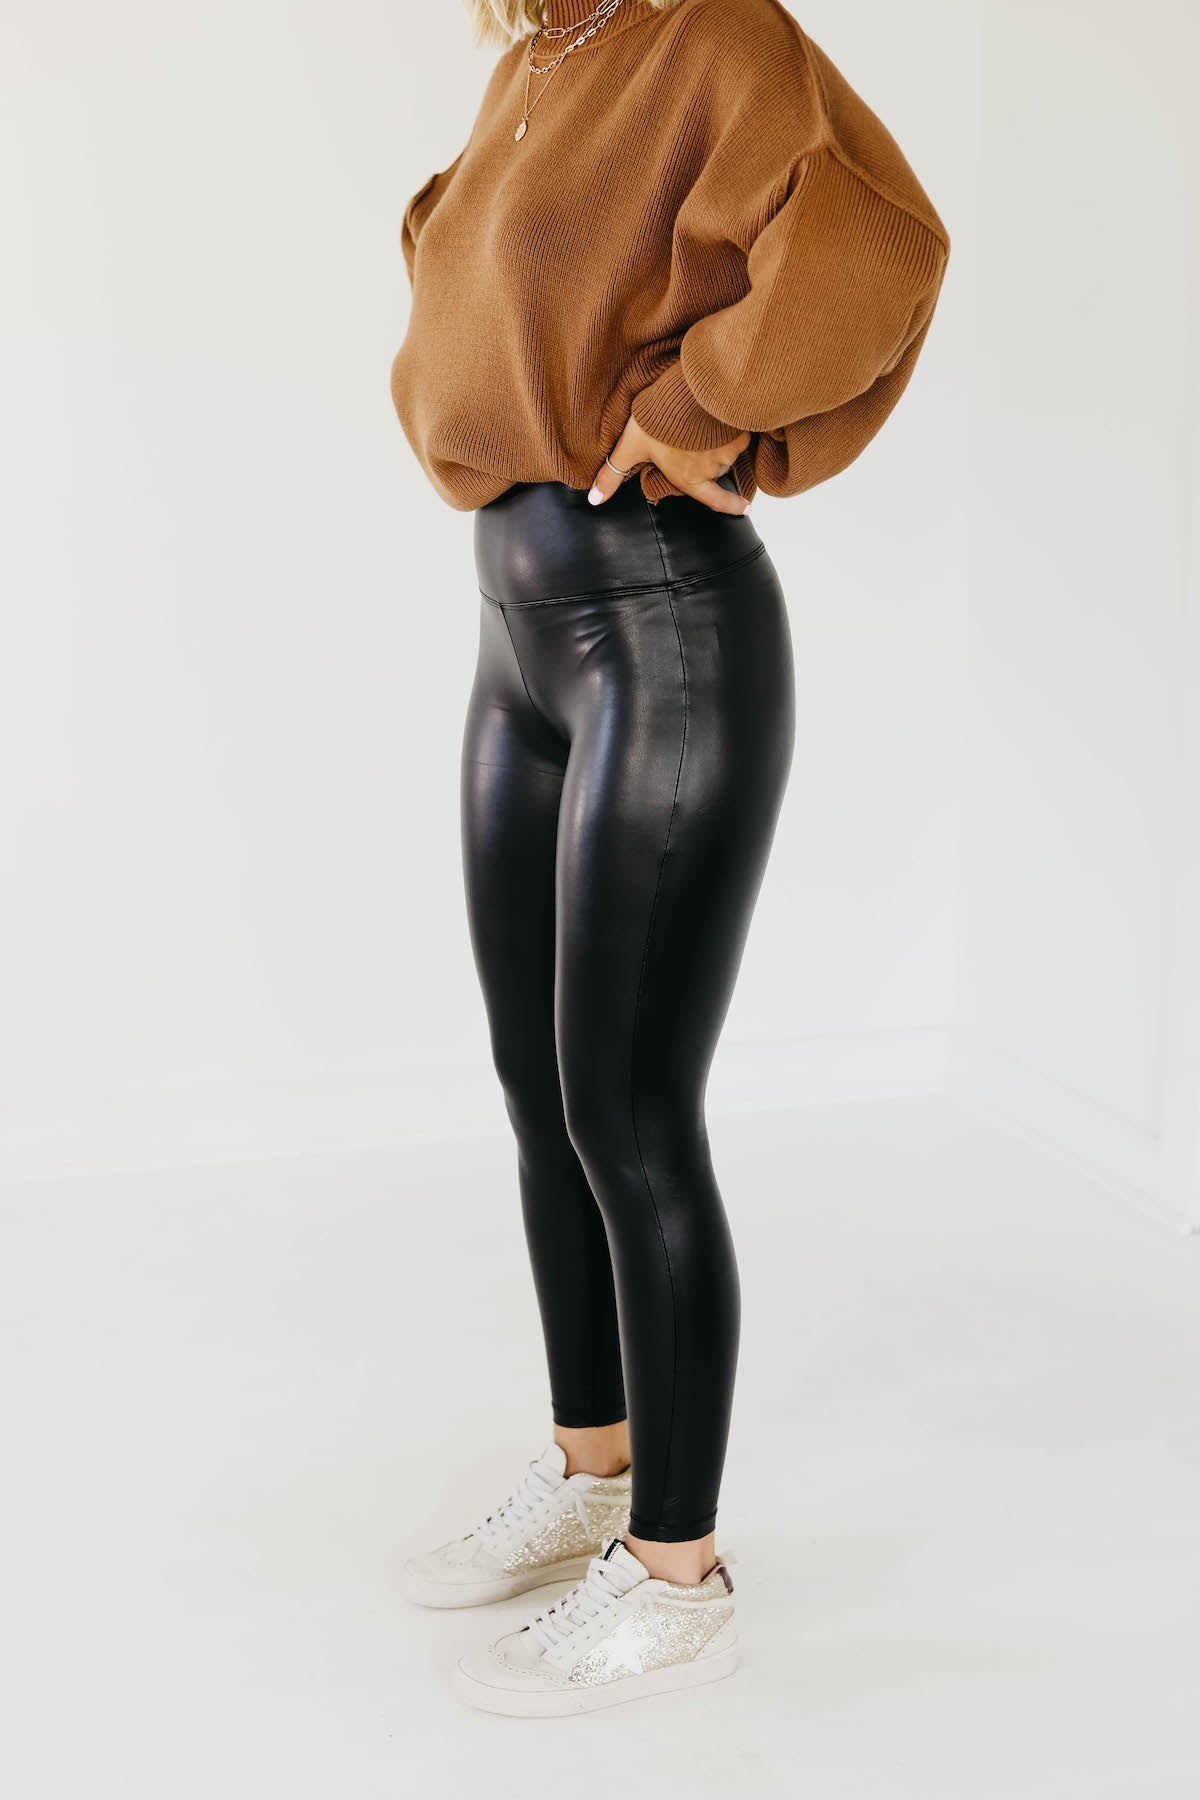 New Look Curves Black Leather-Look High Waist Leggings | littlewoods.com